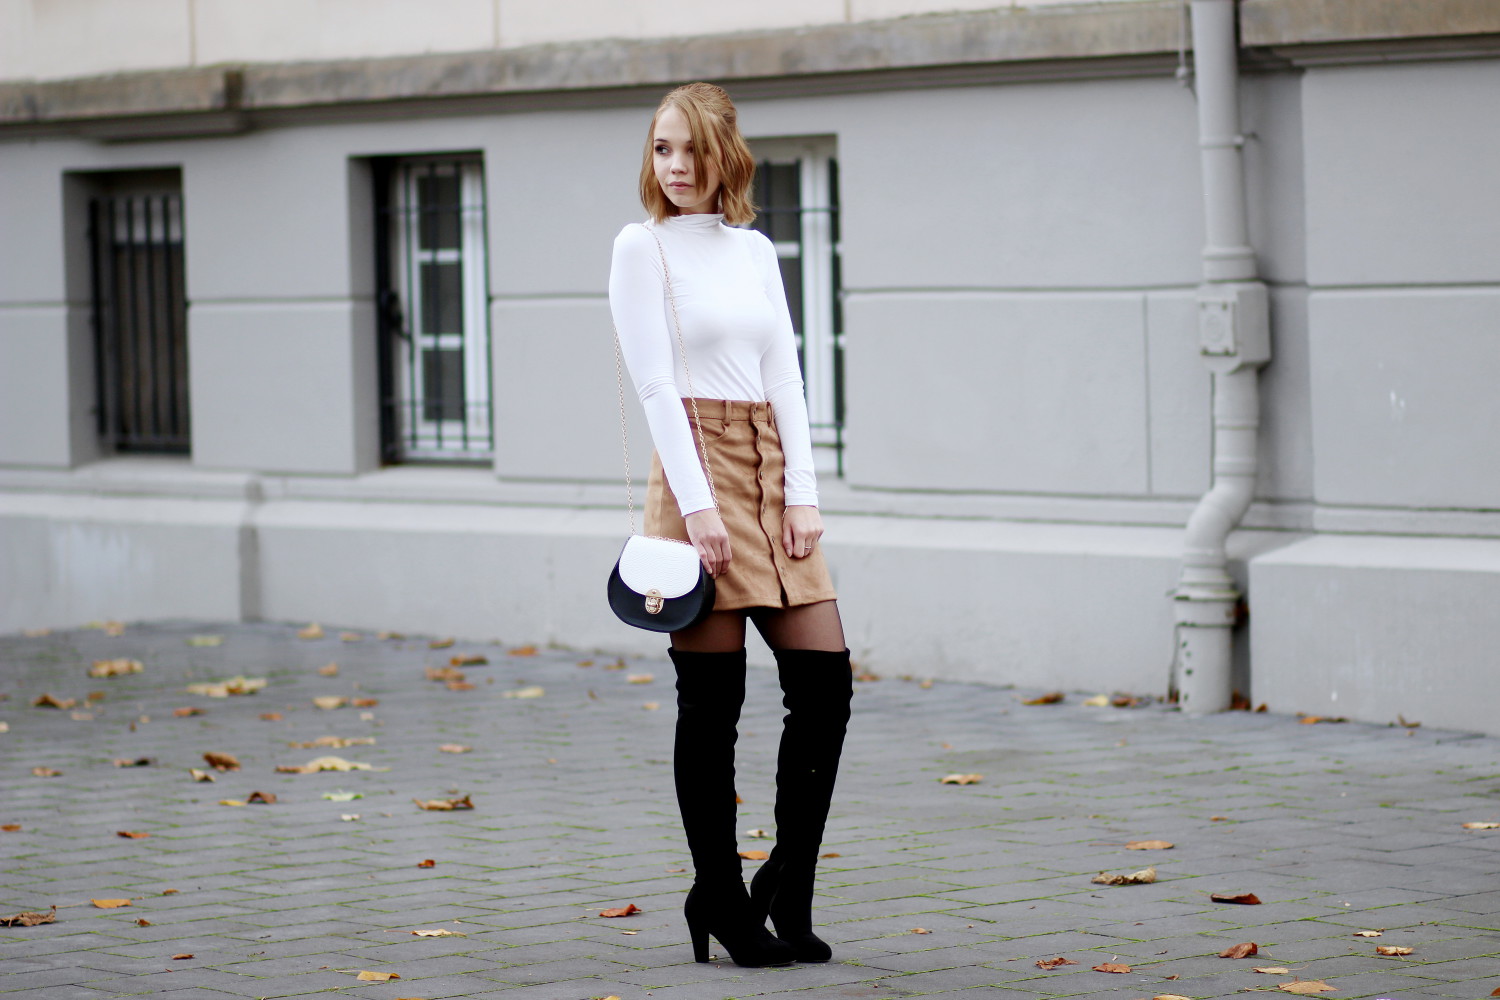 bezauberndenana-fashionblog-outfit-streetstyle-brauner-wildlederrock-weißer-rollkragenpullover-overknees-70s